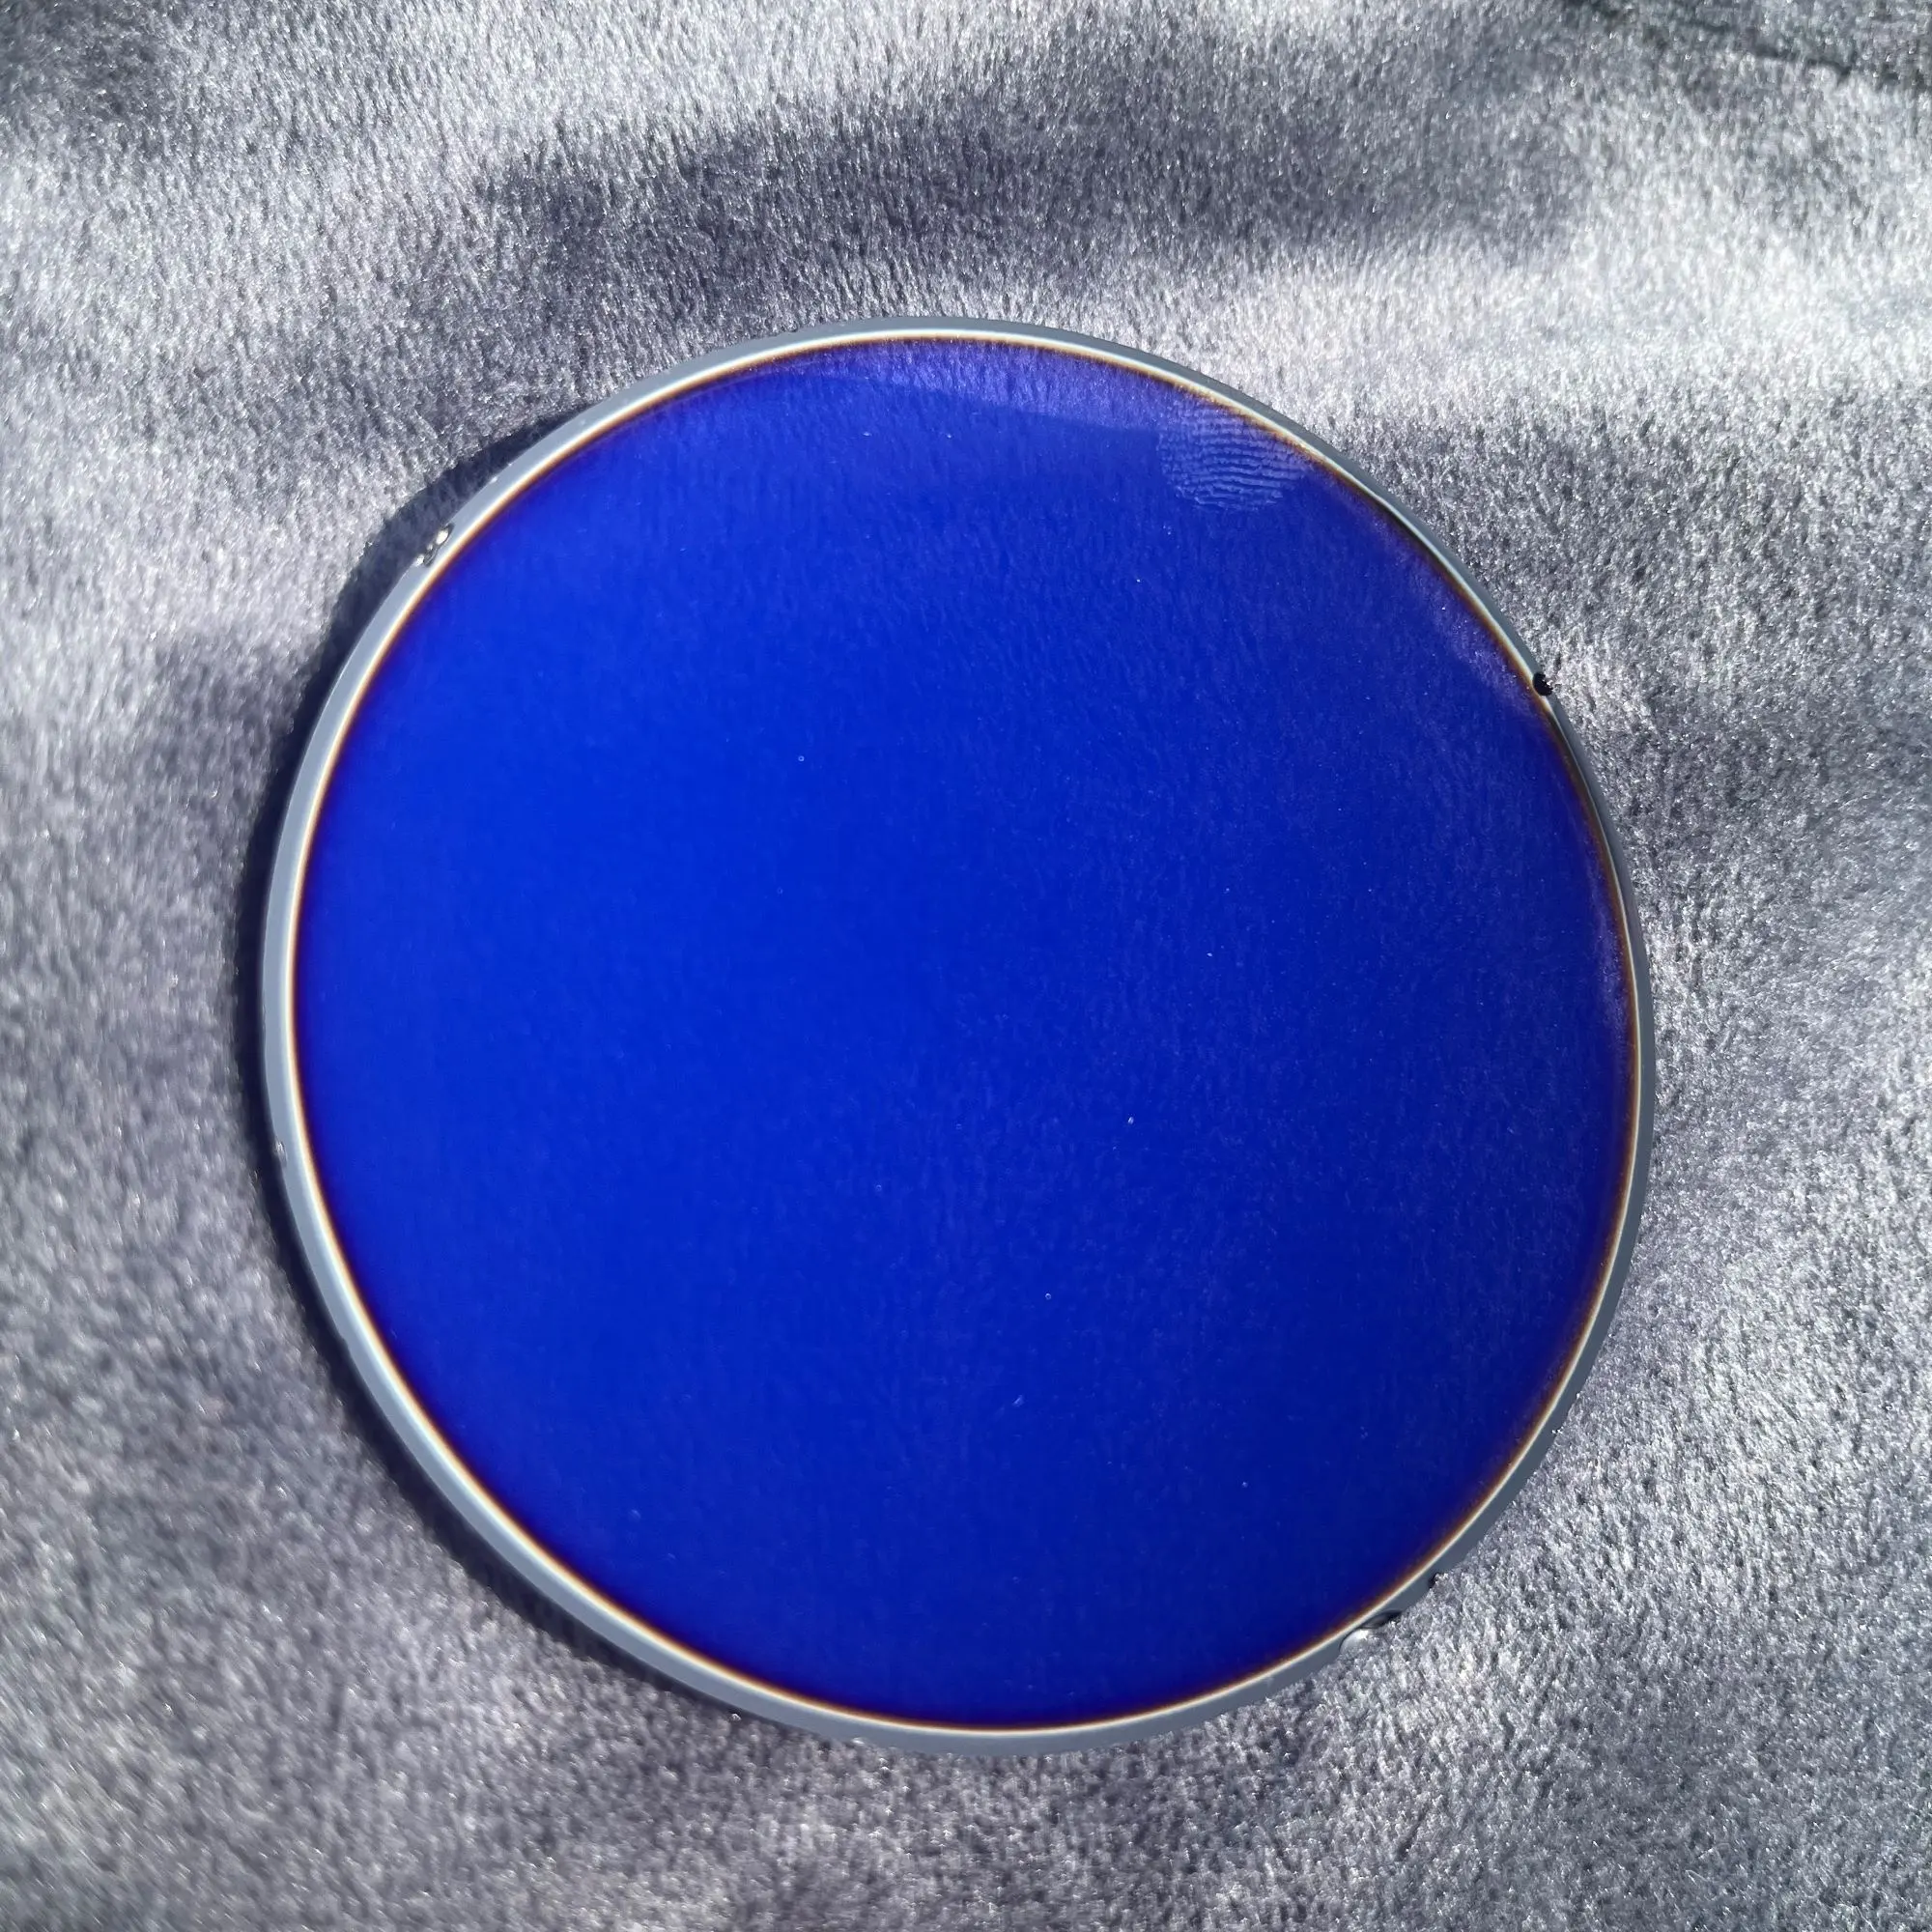 1.56 Blue Cut photo gray blue S Hmc Lenses High Quality glass For Anti Blue block Light Ophthalmic Lens High index